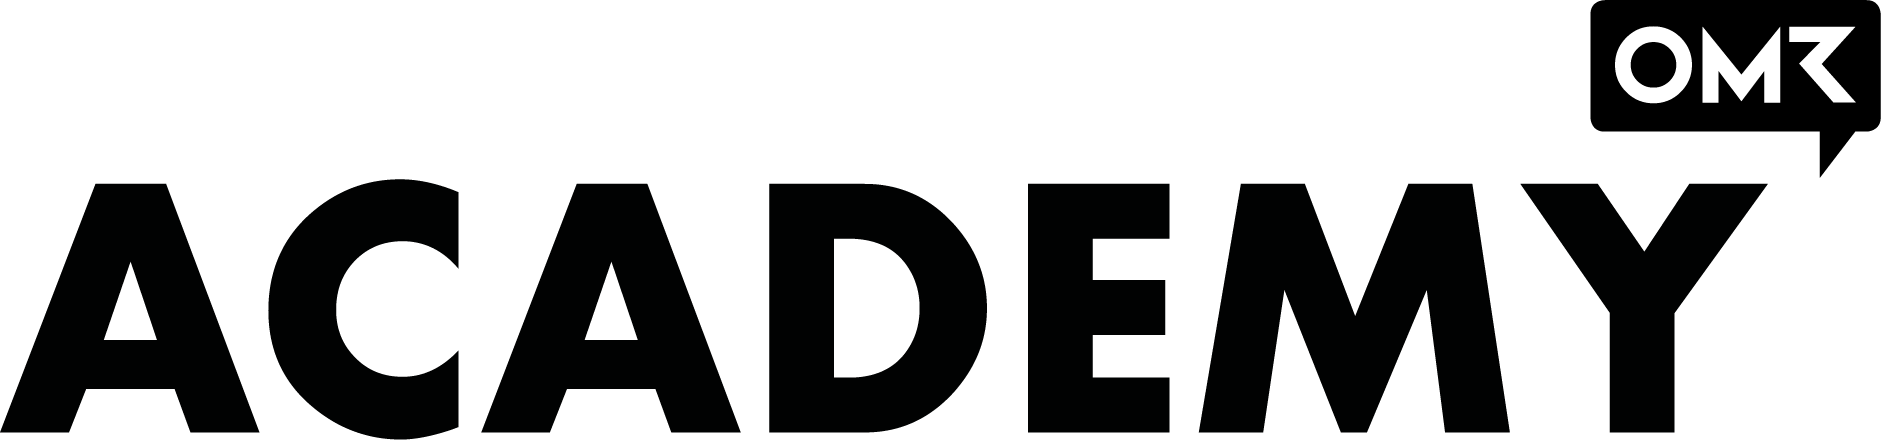 OMR Academy Logo